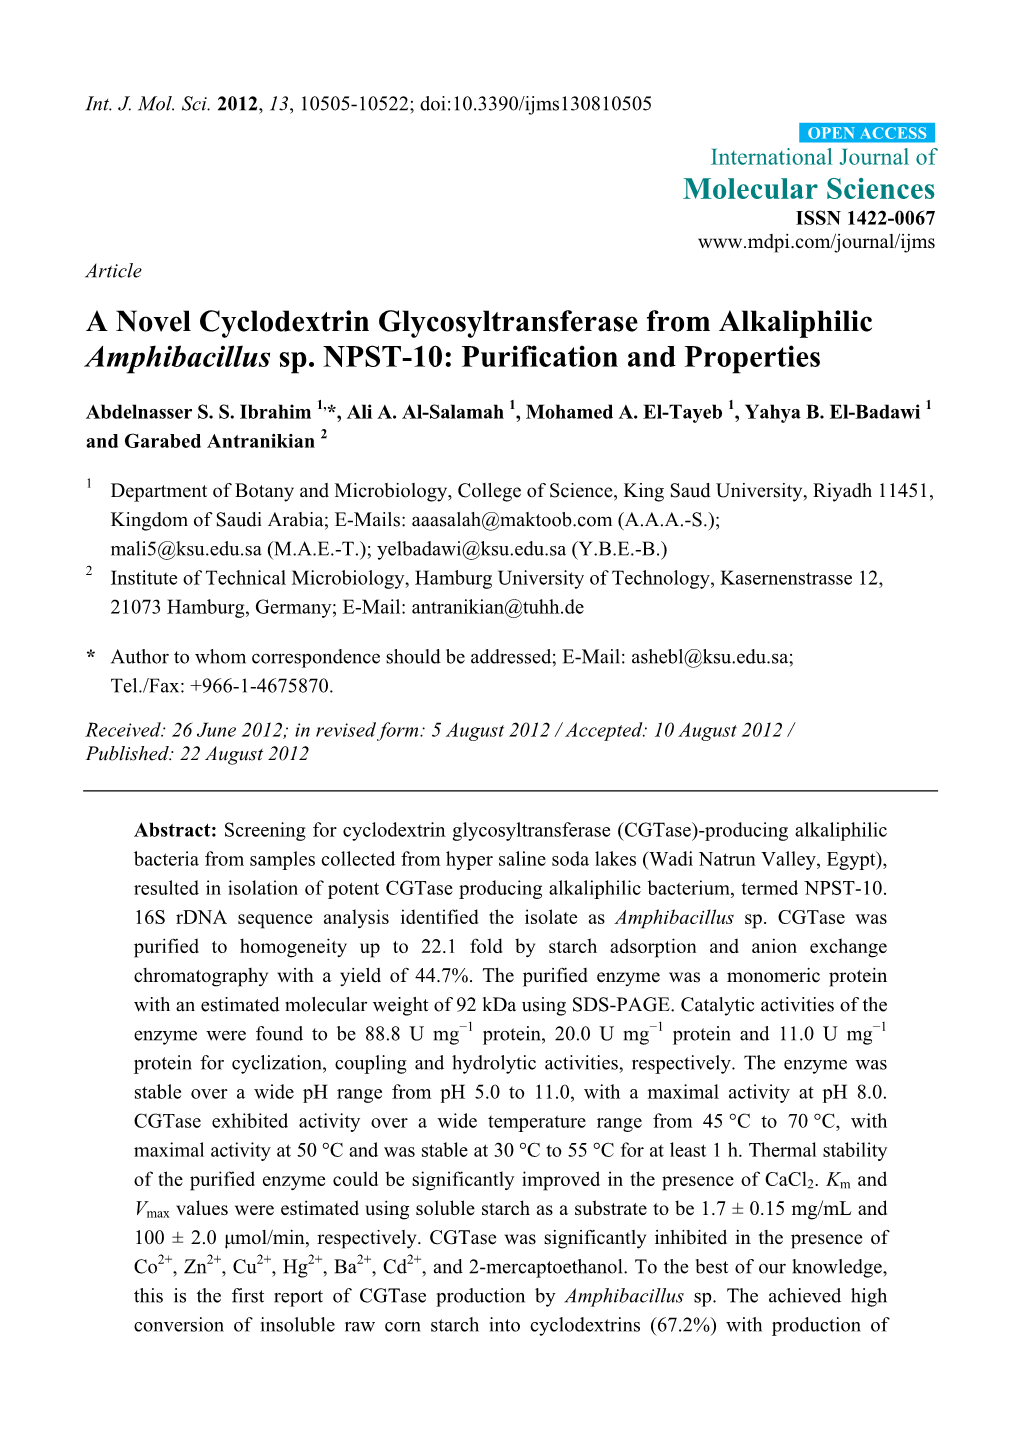 A Novel Cyclodextrin Glycosyltransferase from Alkaliphilic Amphibacillus Sp